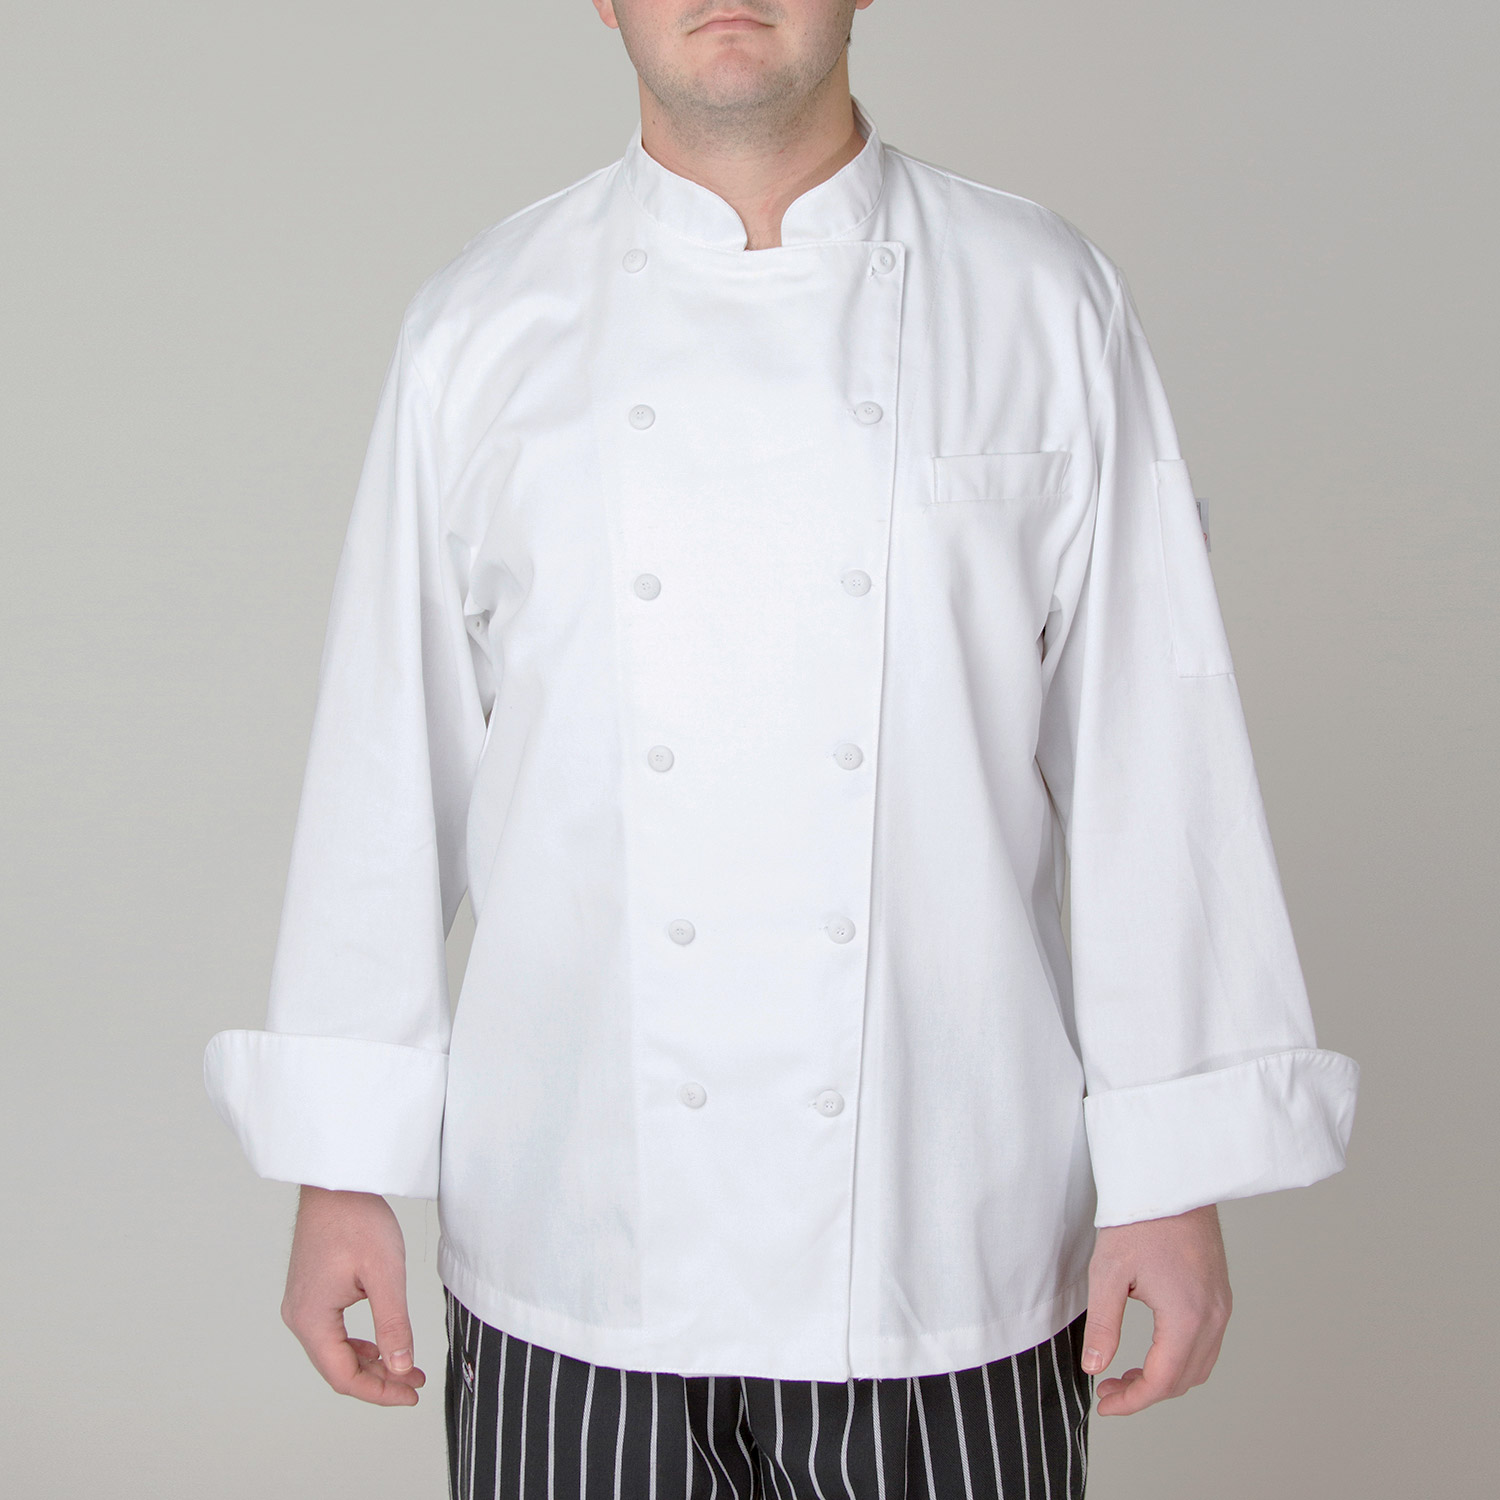 Classic Executive Chef Coat (CW5690) - White